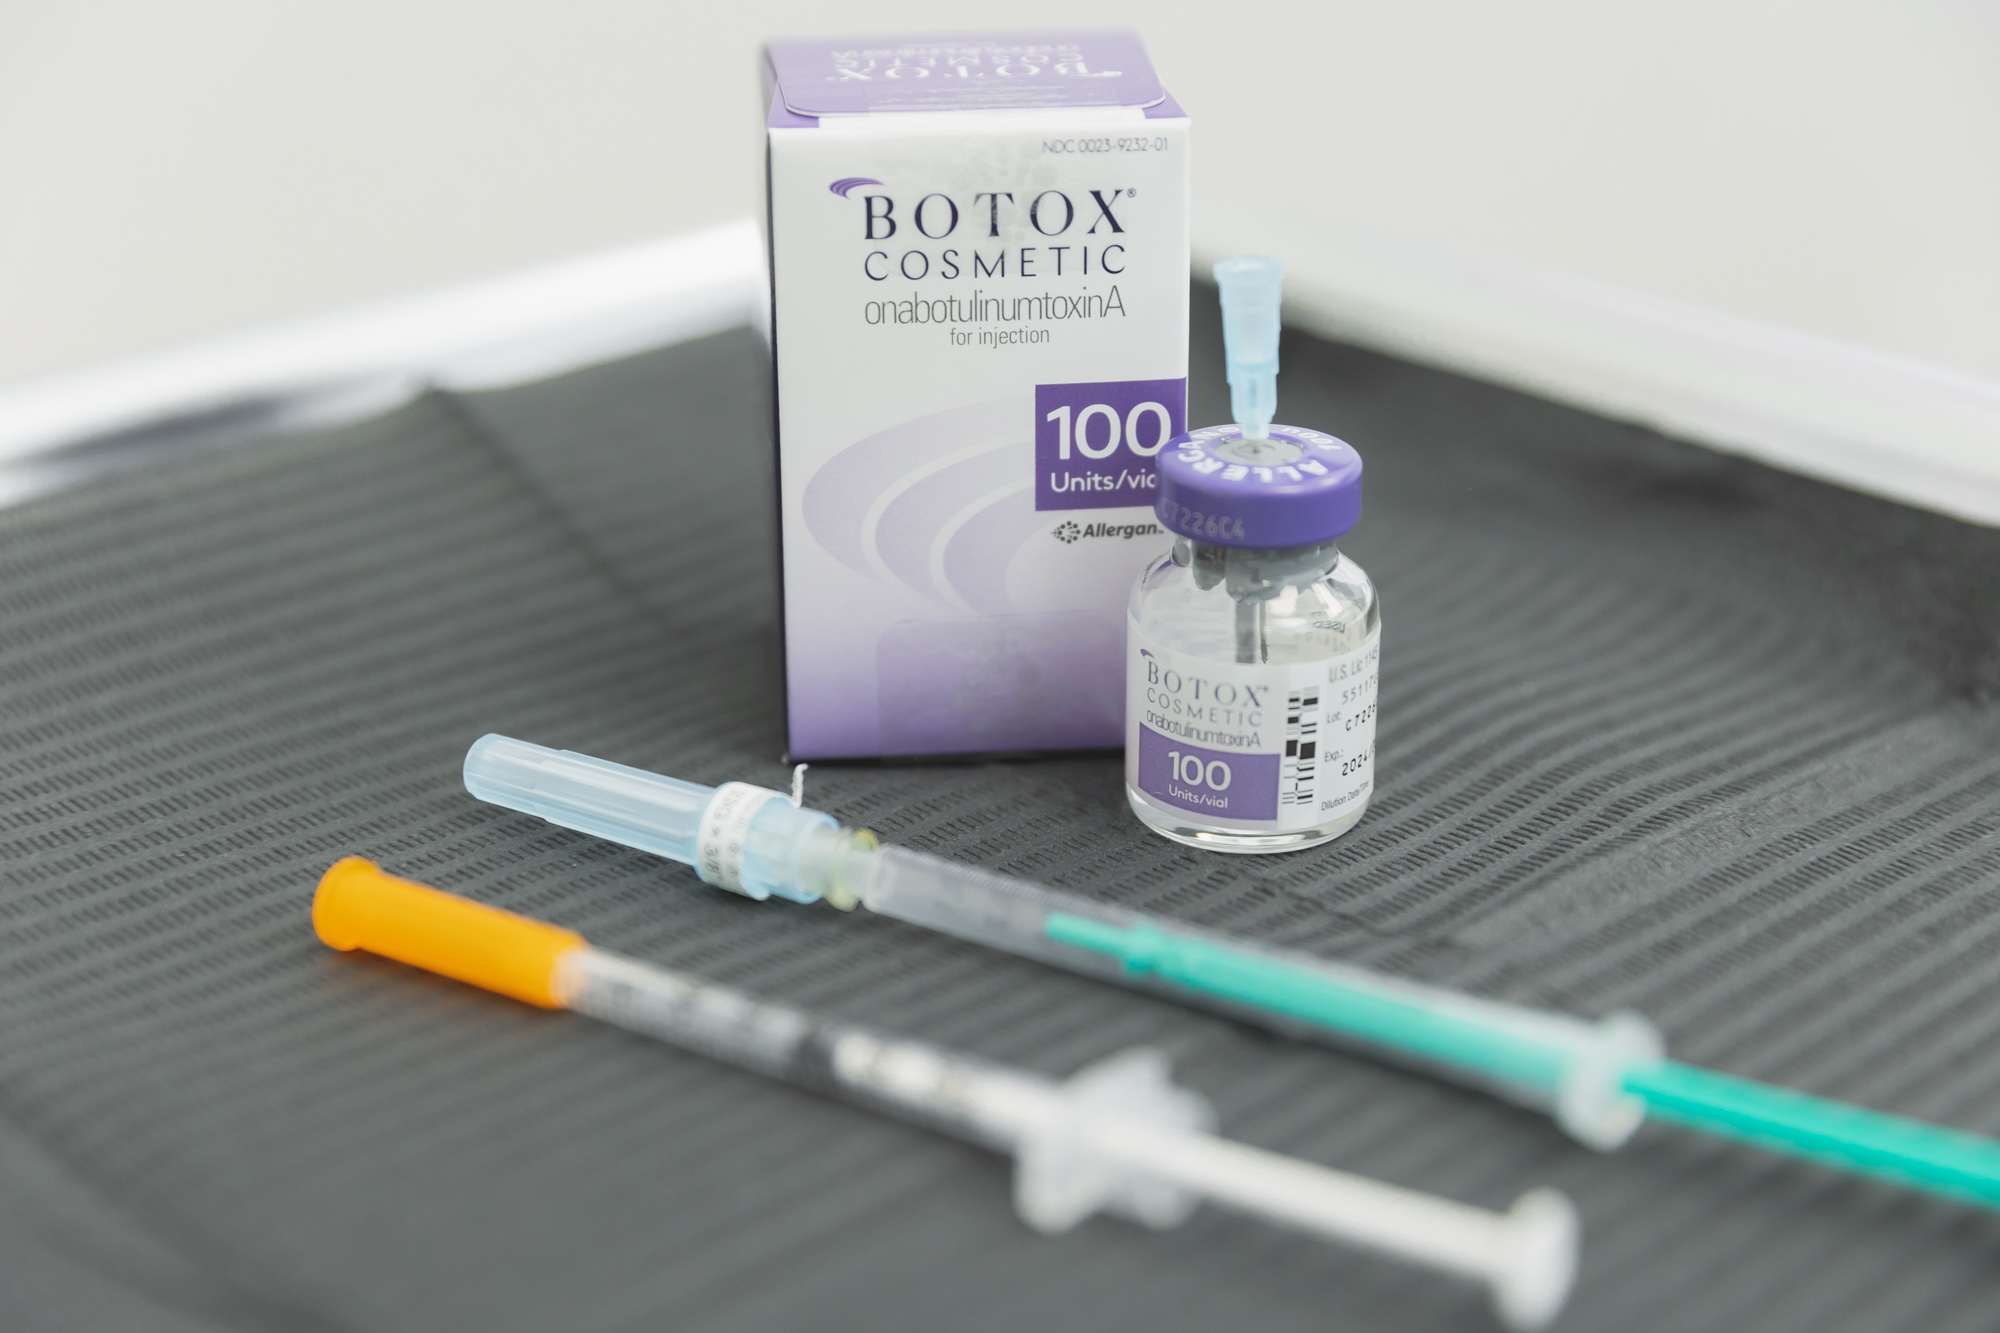 botox product and needles